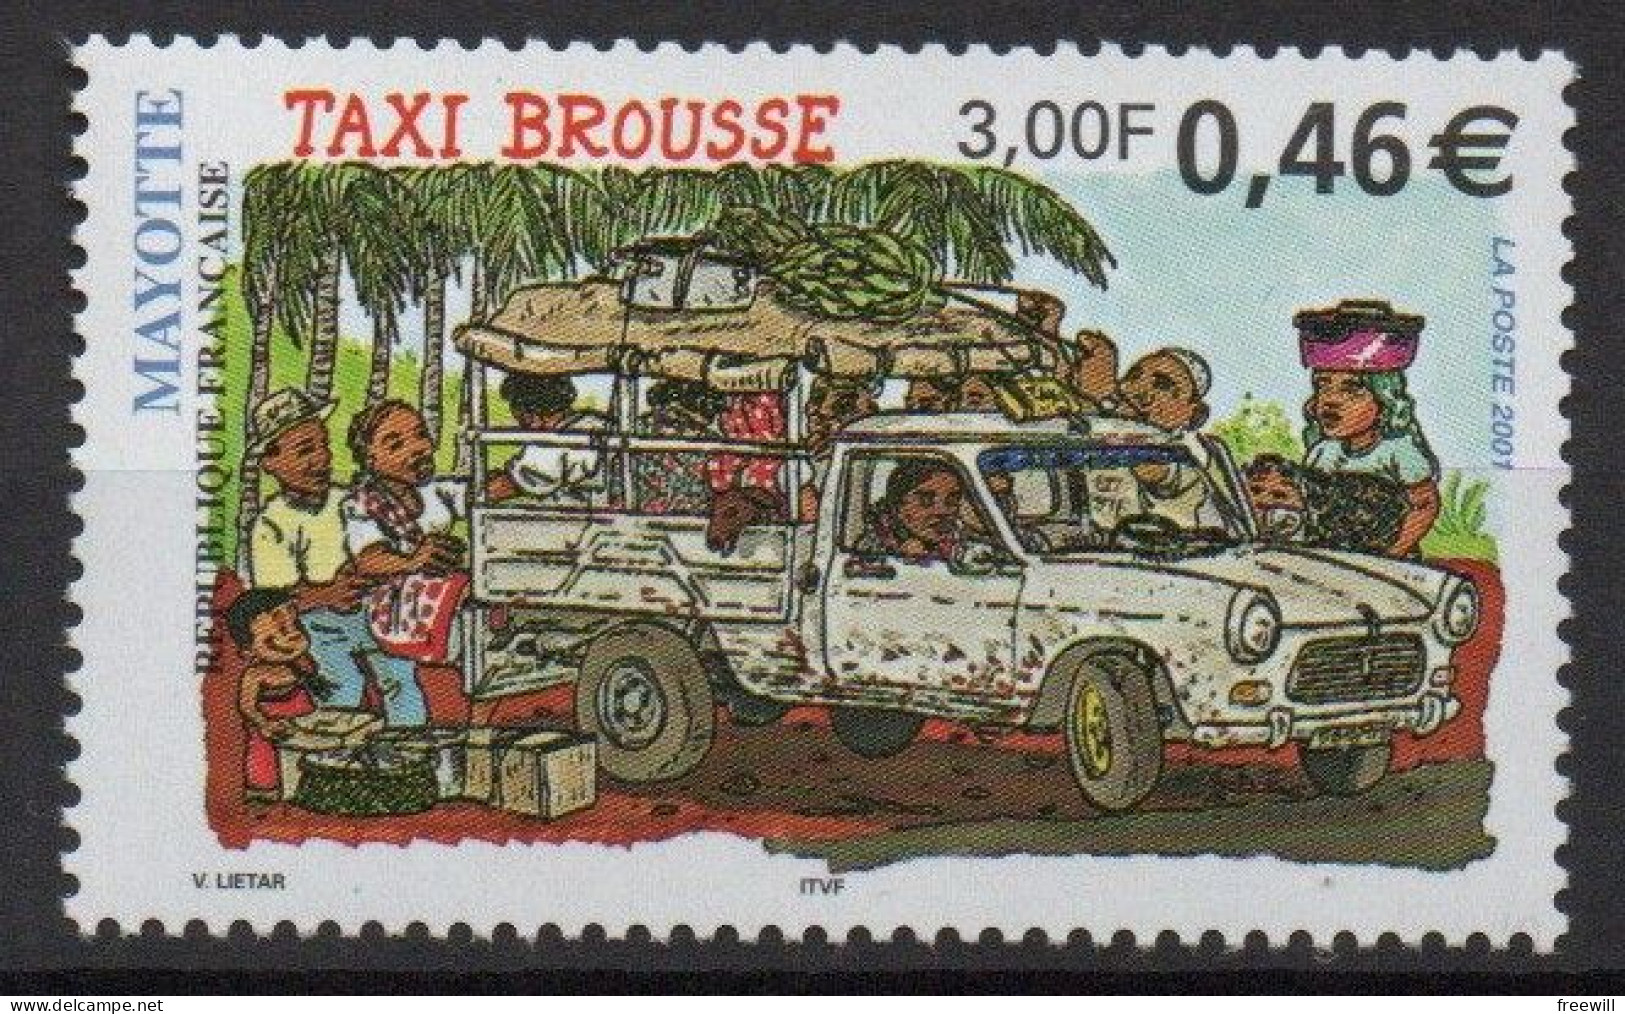 Mayotte  Timbres divers - Various stamps -Verschillende postzegels XXX